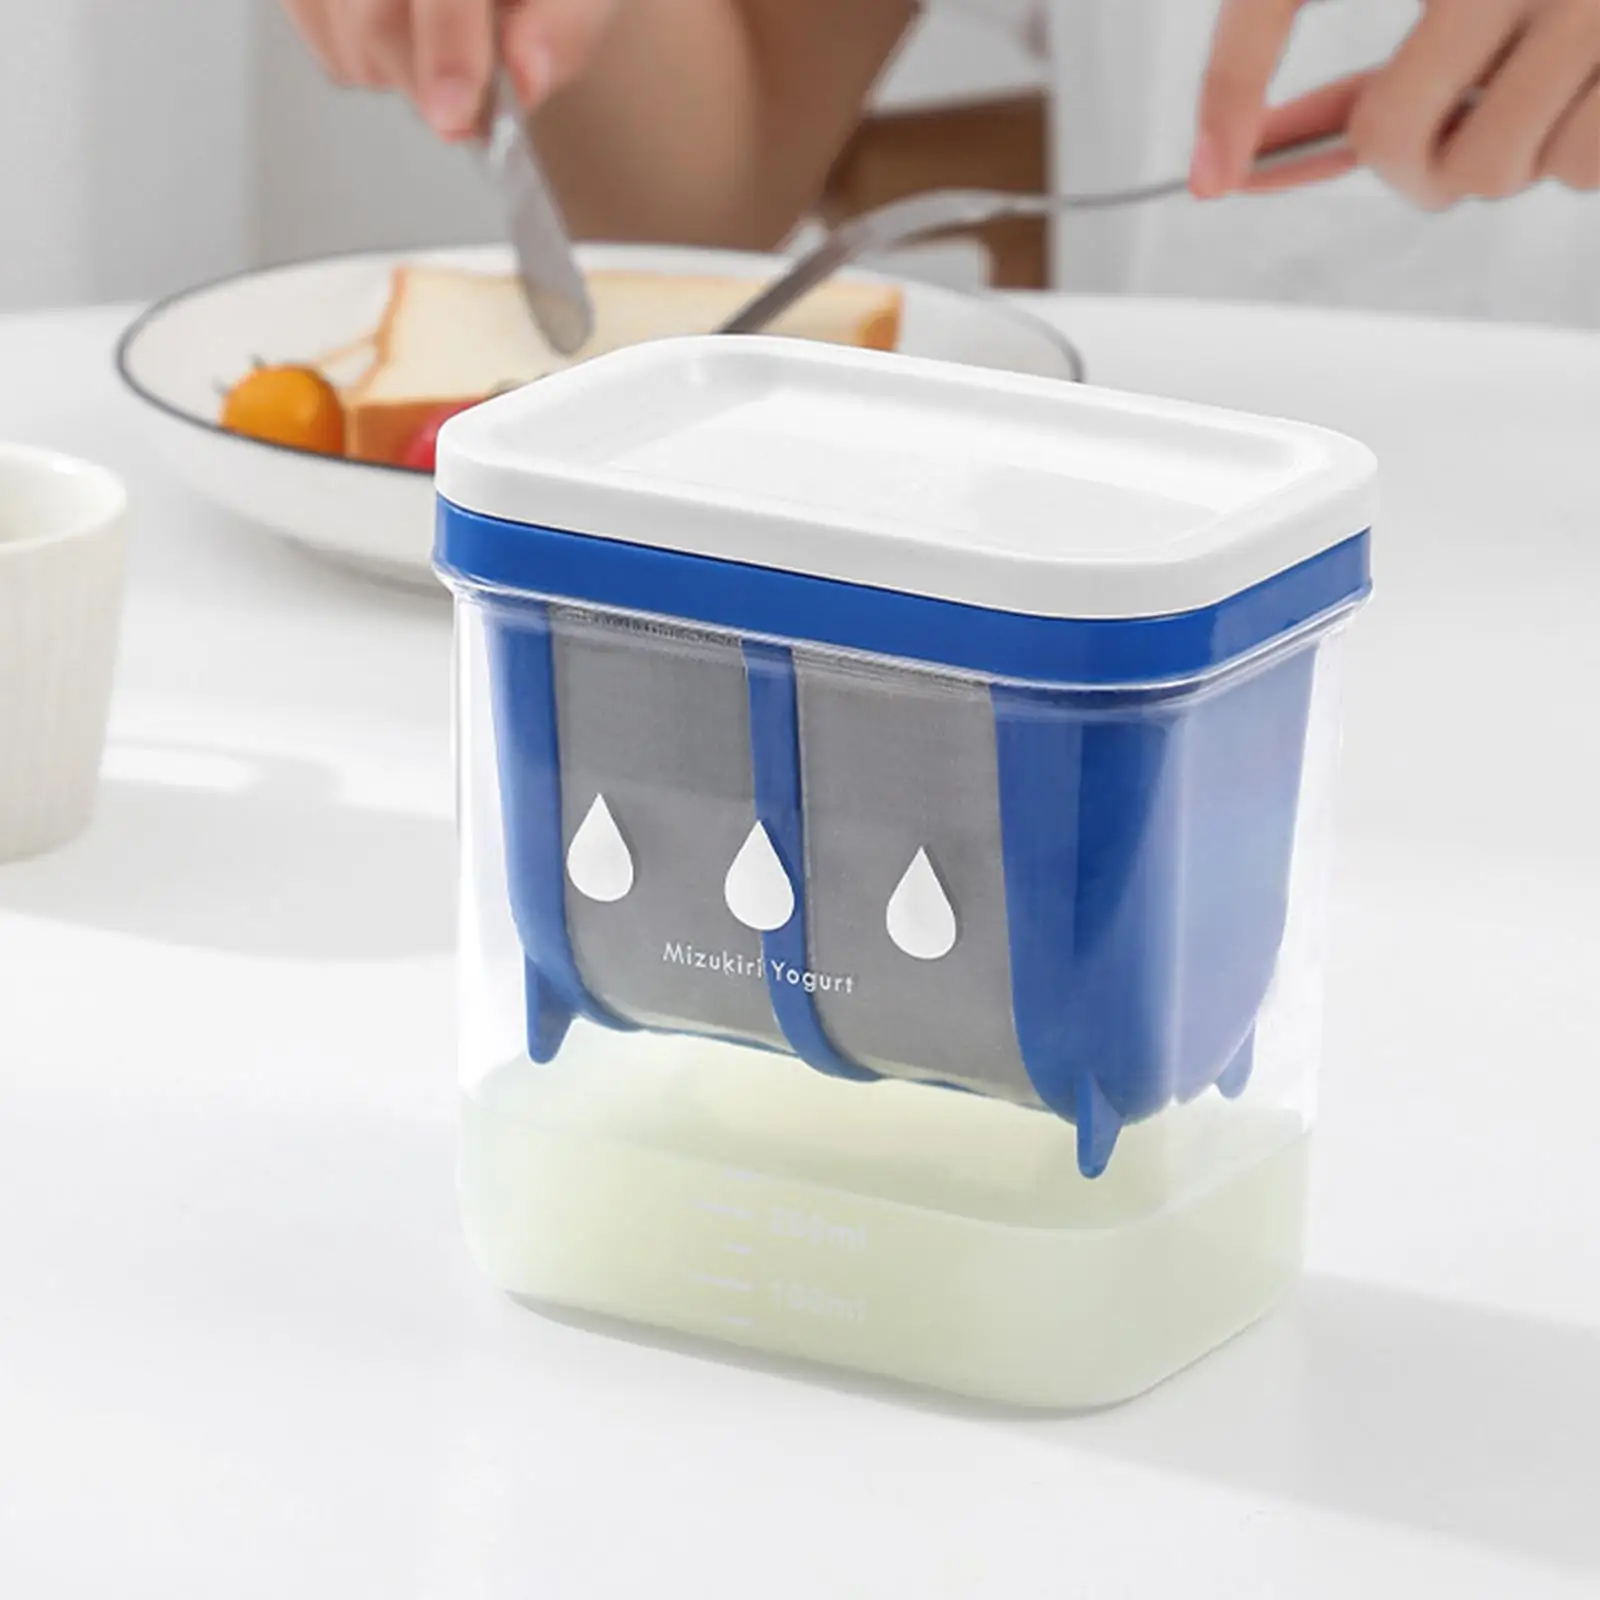 Greece Yogurt Filter Multifunctional Household Tool, Kitchen Gadgets, Reusable